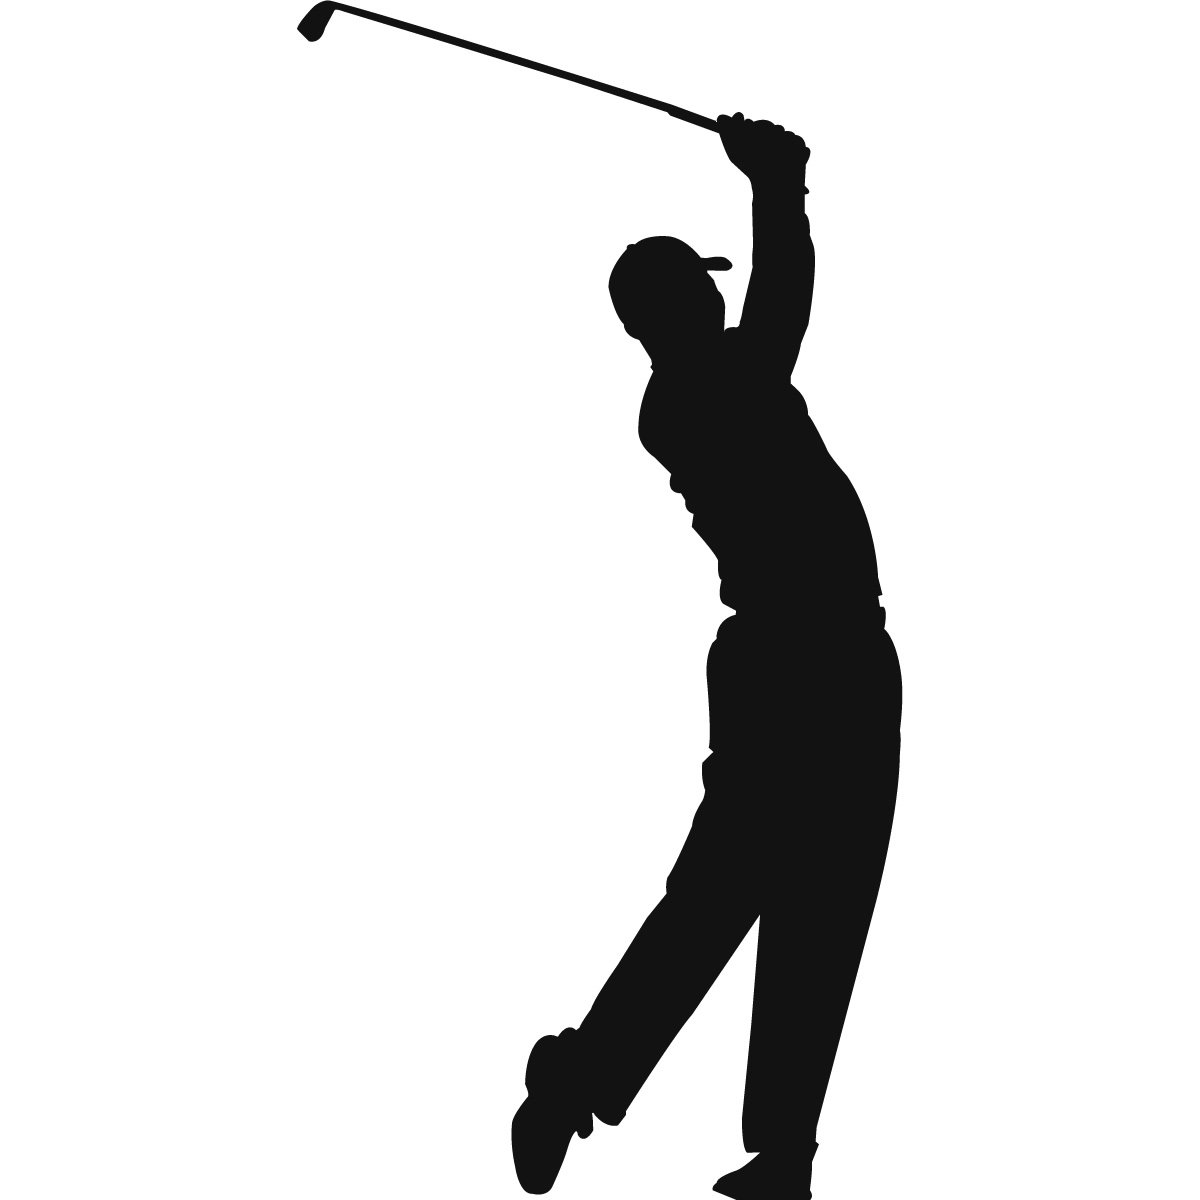 Golf logos on clip art golf and golfers - Cliparting.com